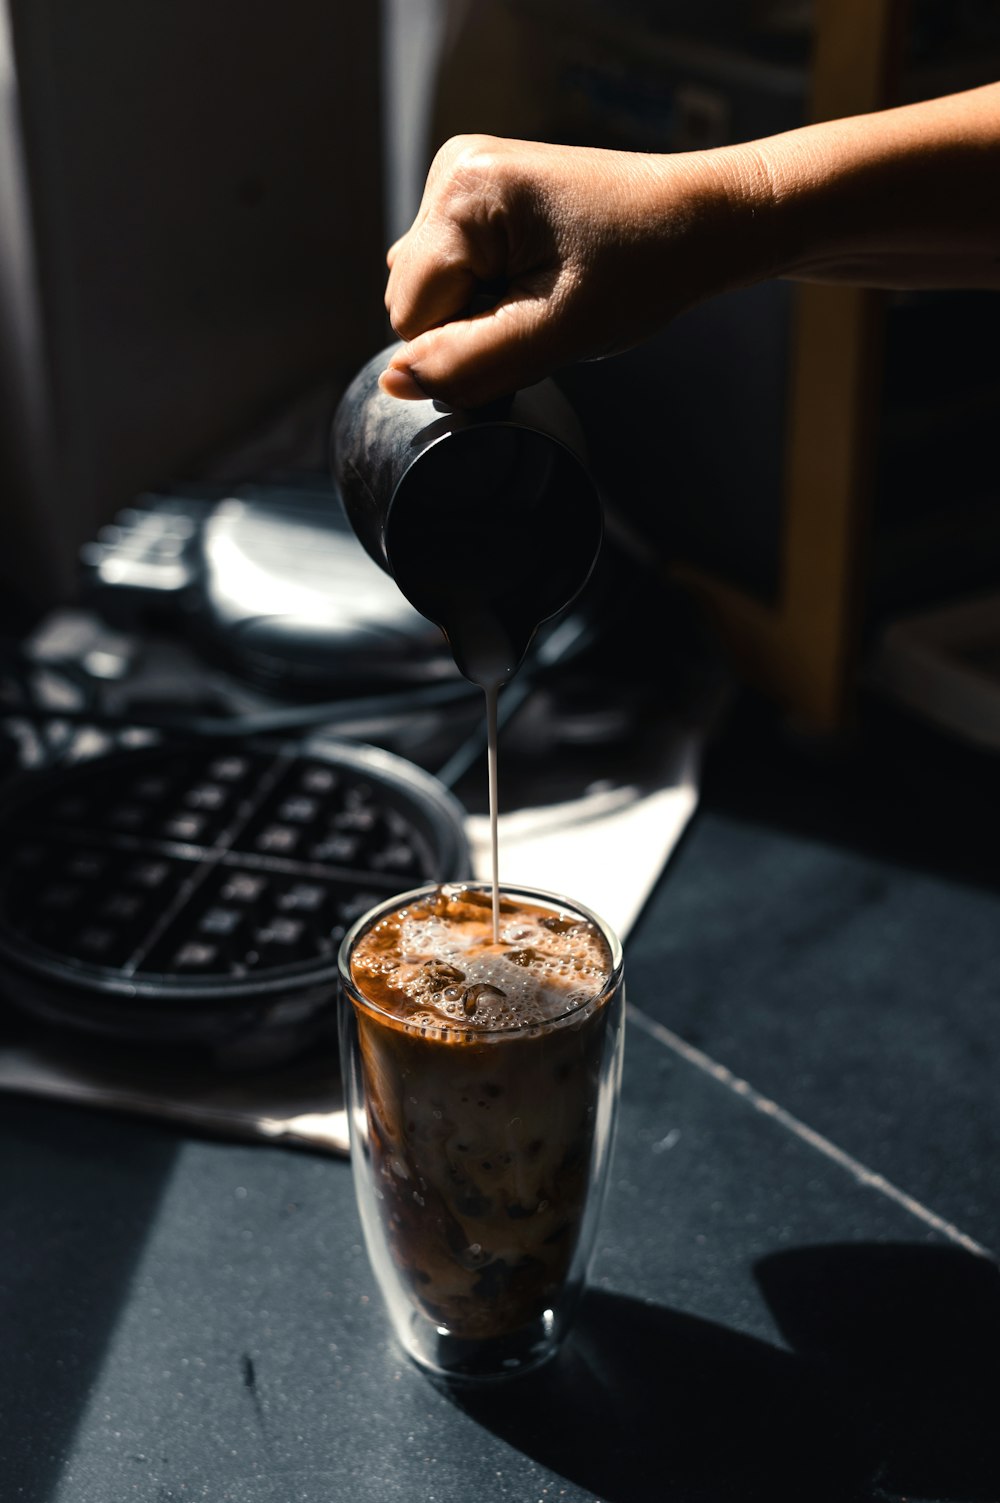 a person pours coffee into a glass